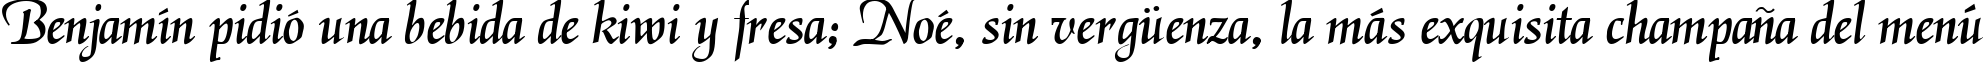 Пример написания шрифтом Magik текста на испанском